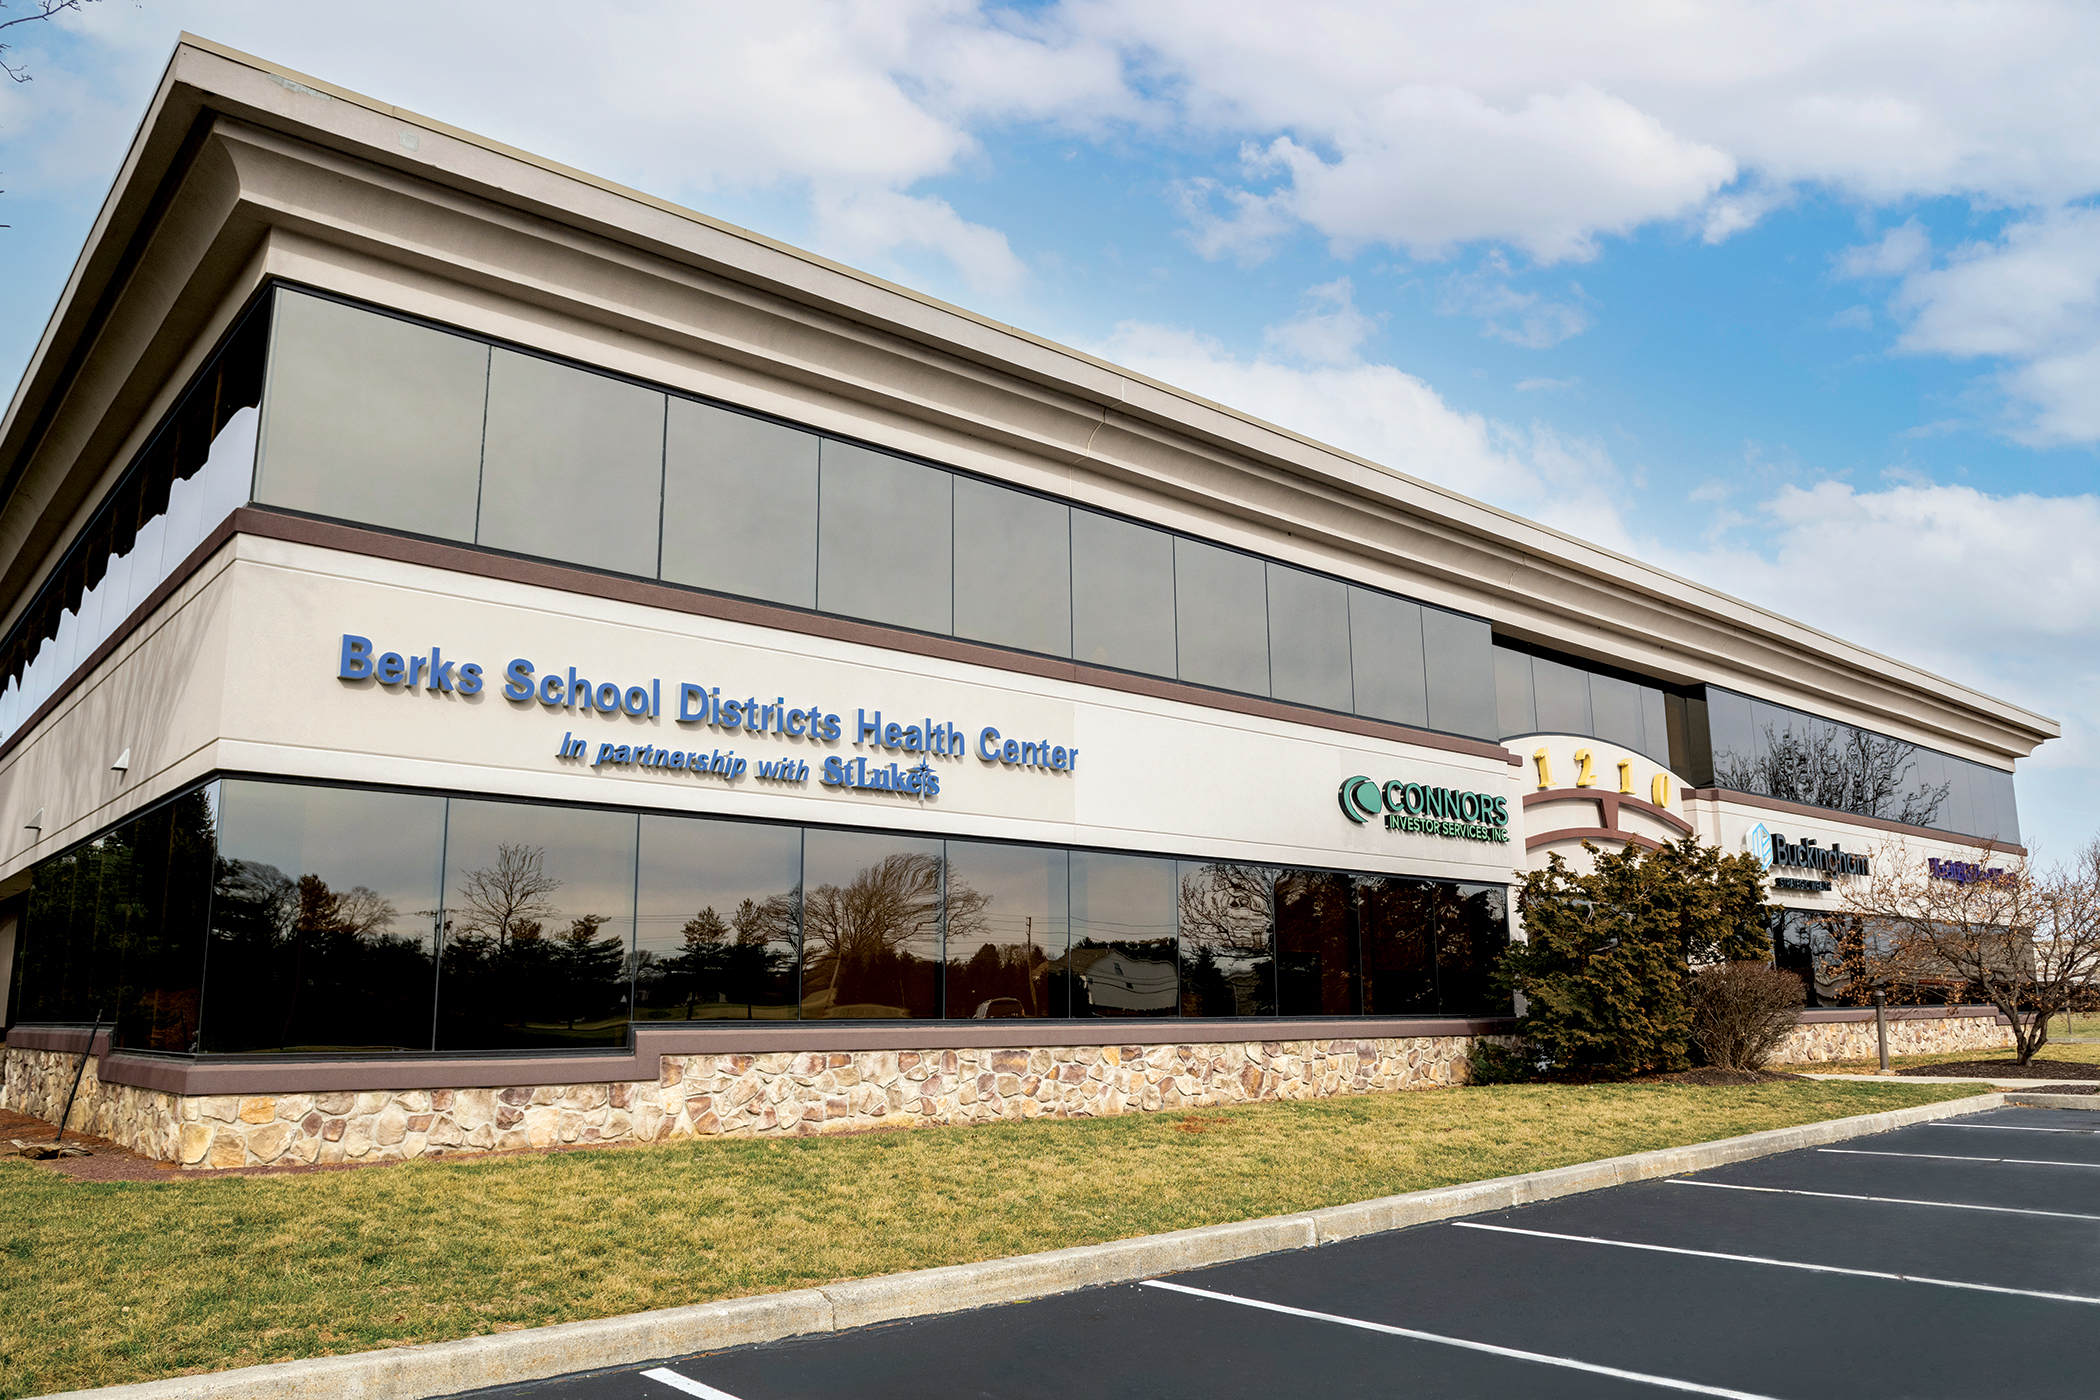 Berks School Districts Health Center